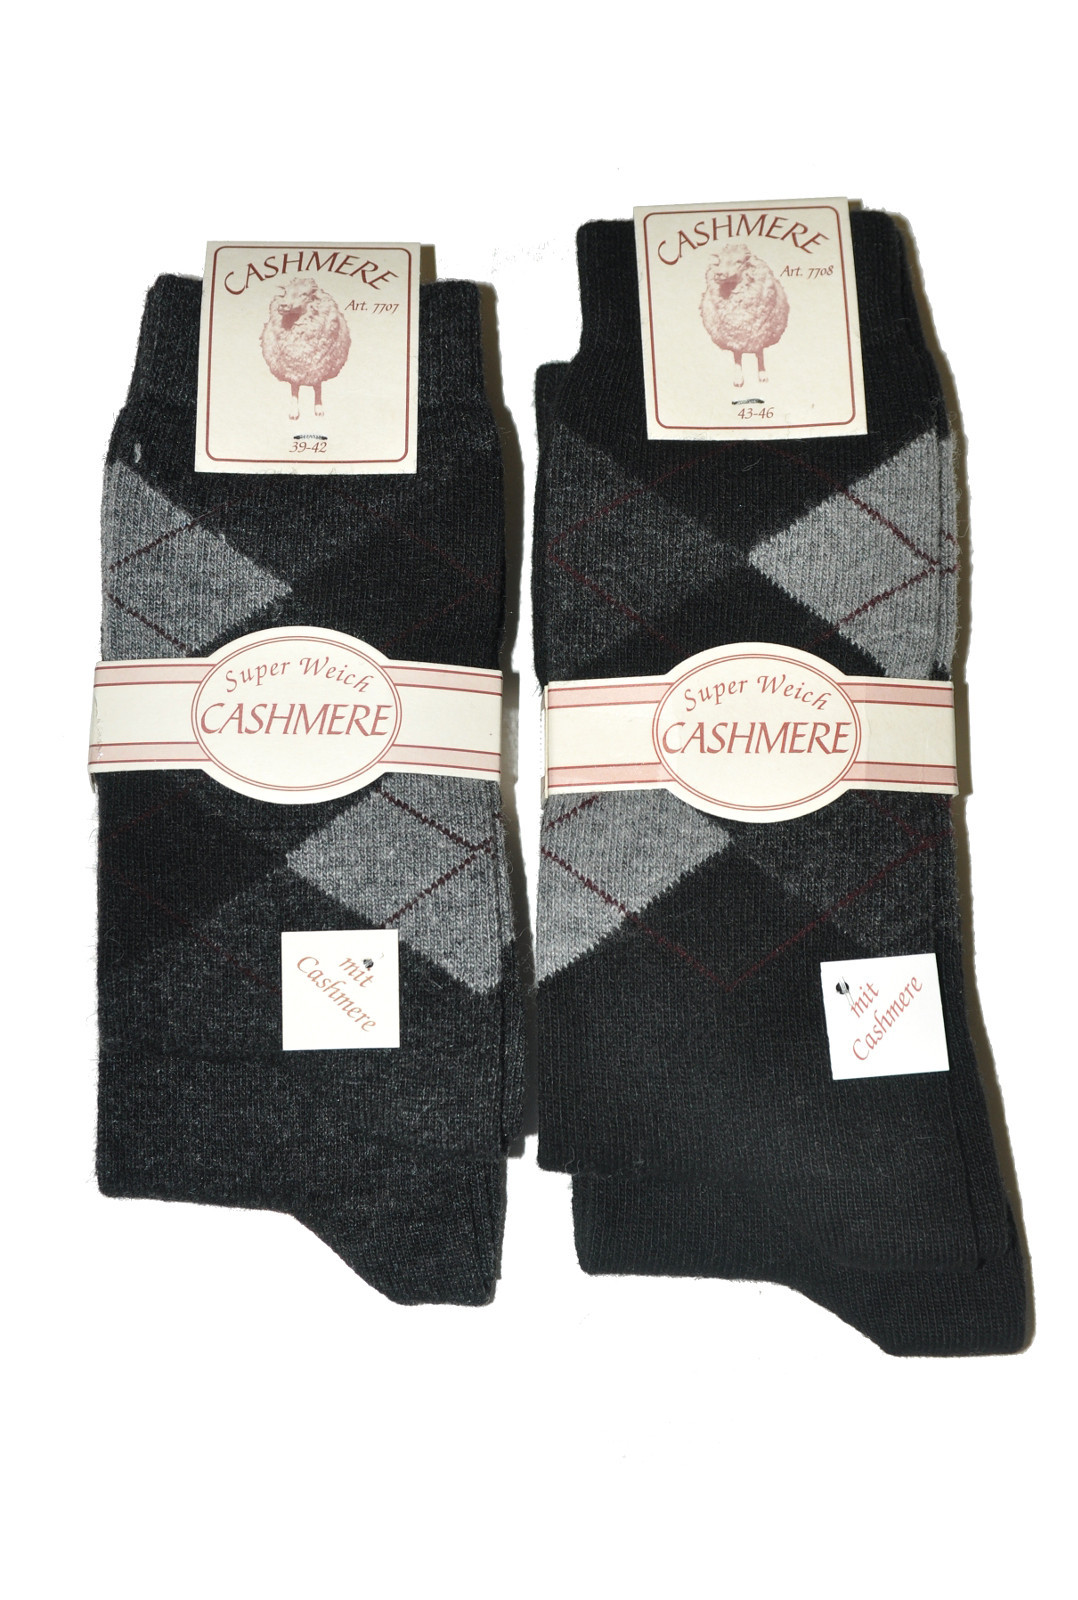 Pánské ponožky Ulpio Cashmere 7707/7708 A'2 směs barev 39-42